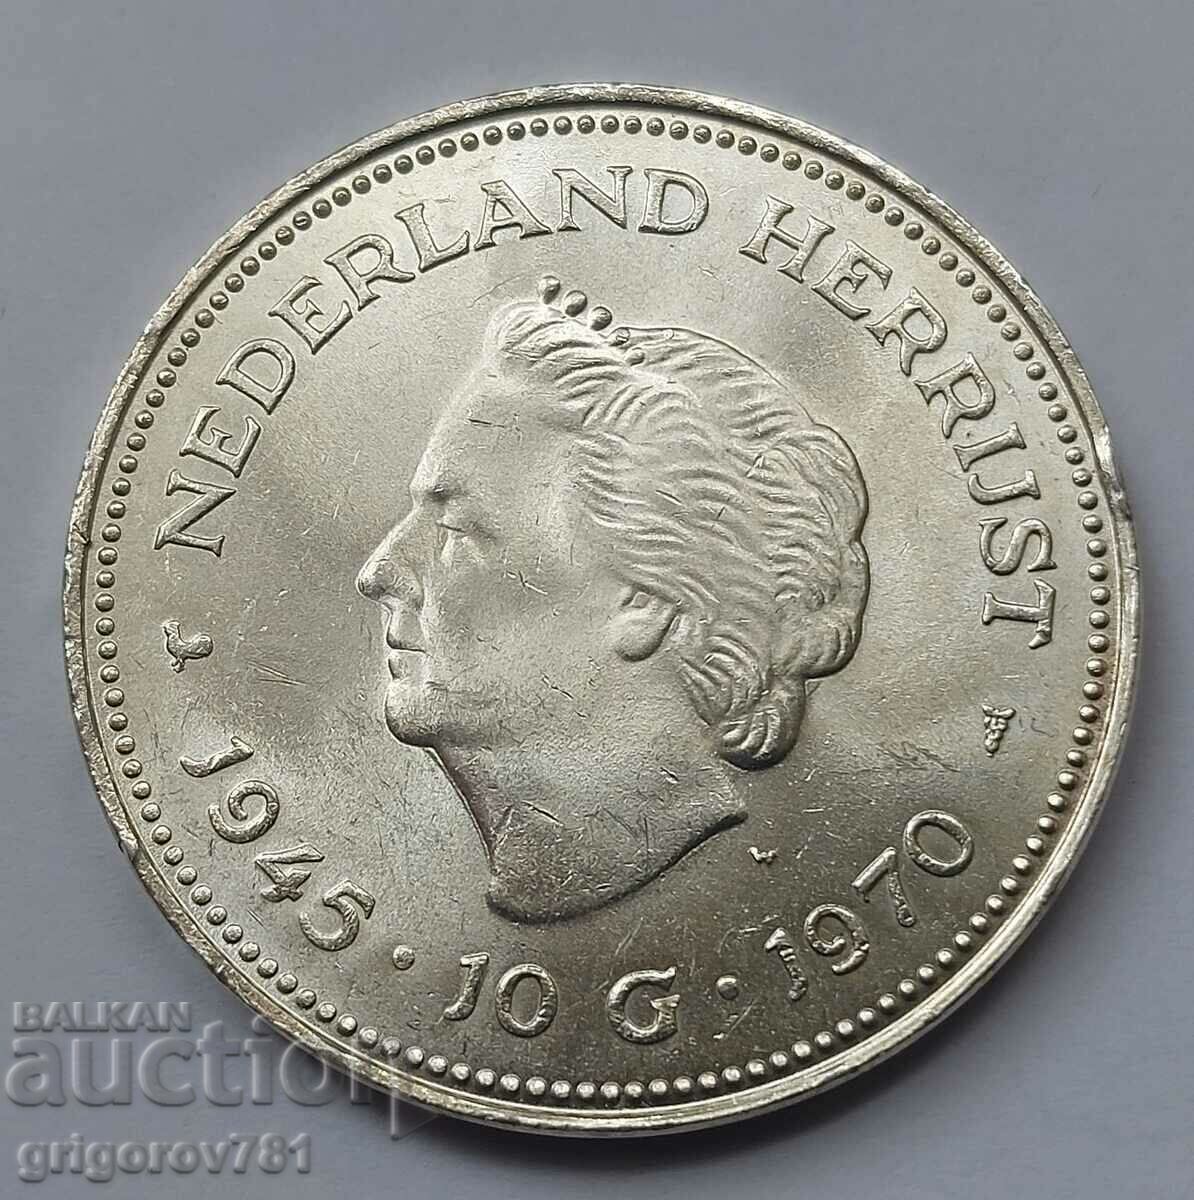 10 Guilder Silver Netherlands 1970 - Ασημένιο νόμισμα #4